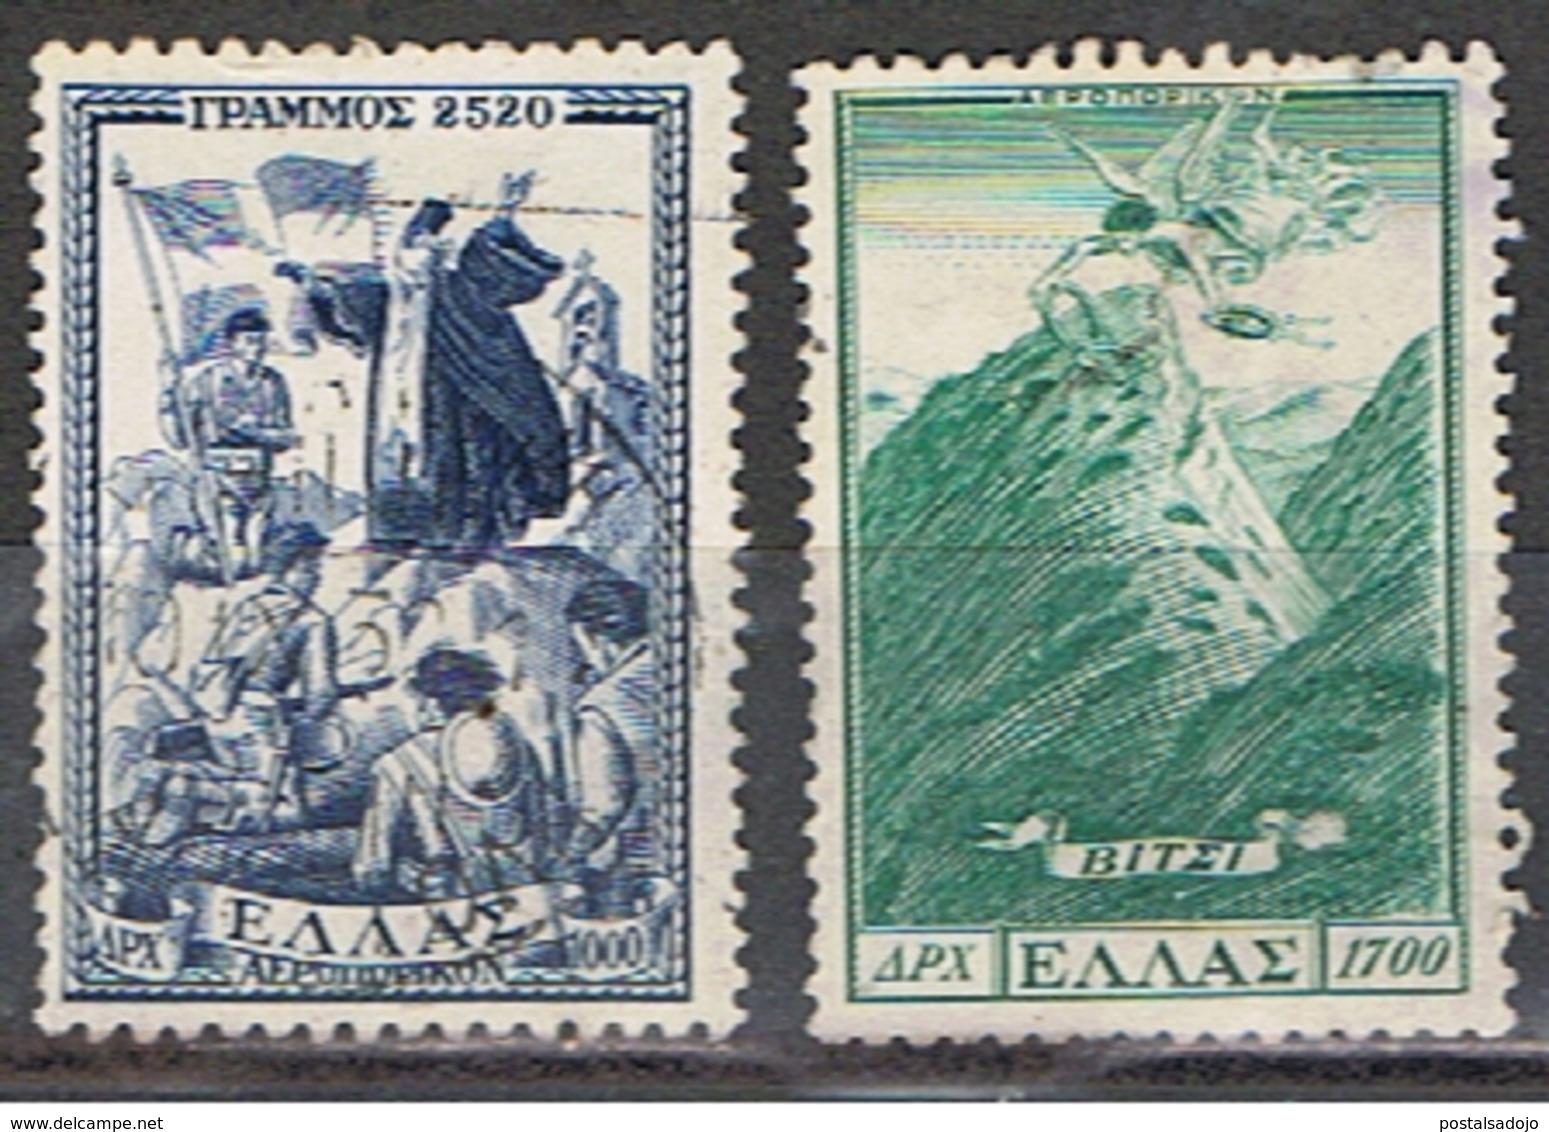 (GR 204) GRECE // YVERT 62, 63 POSTE AERIENNE // 1952 - Used Stamps